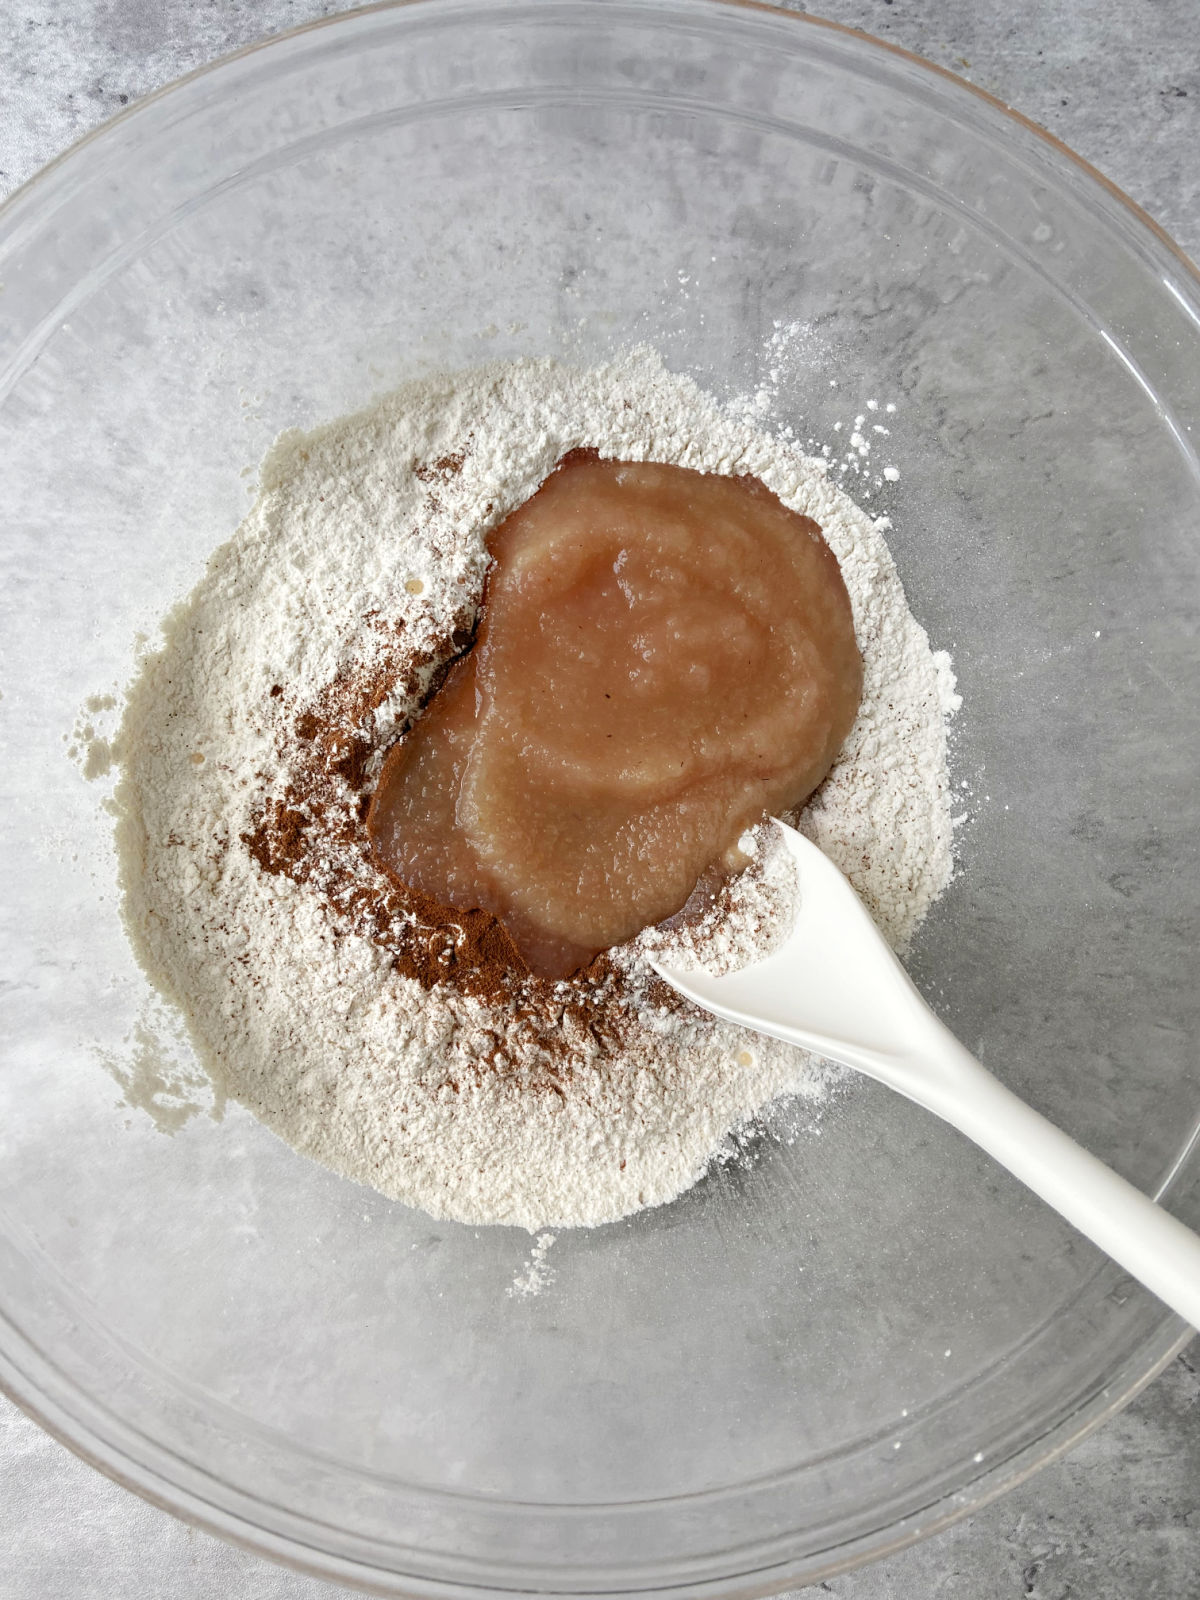 flour mixture with applesauce. 